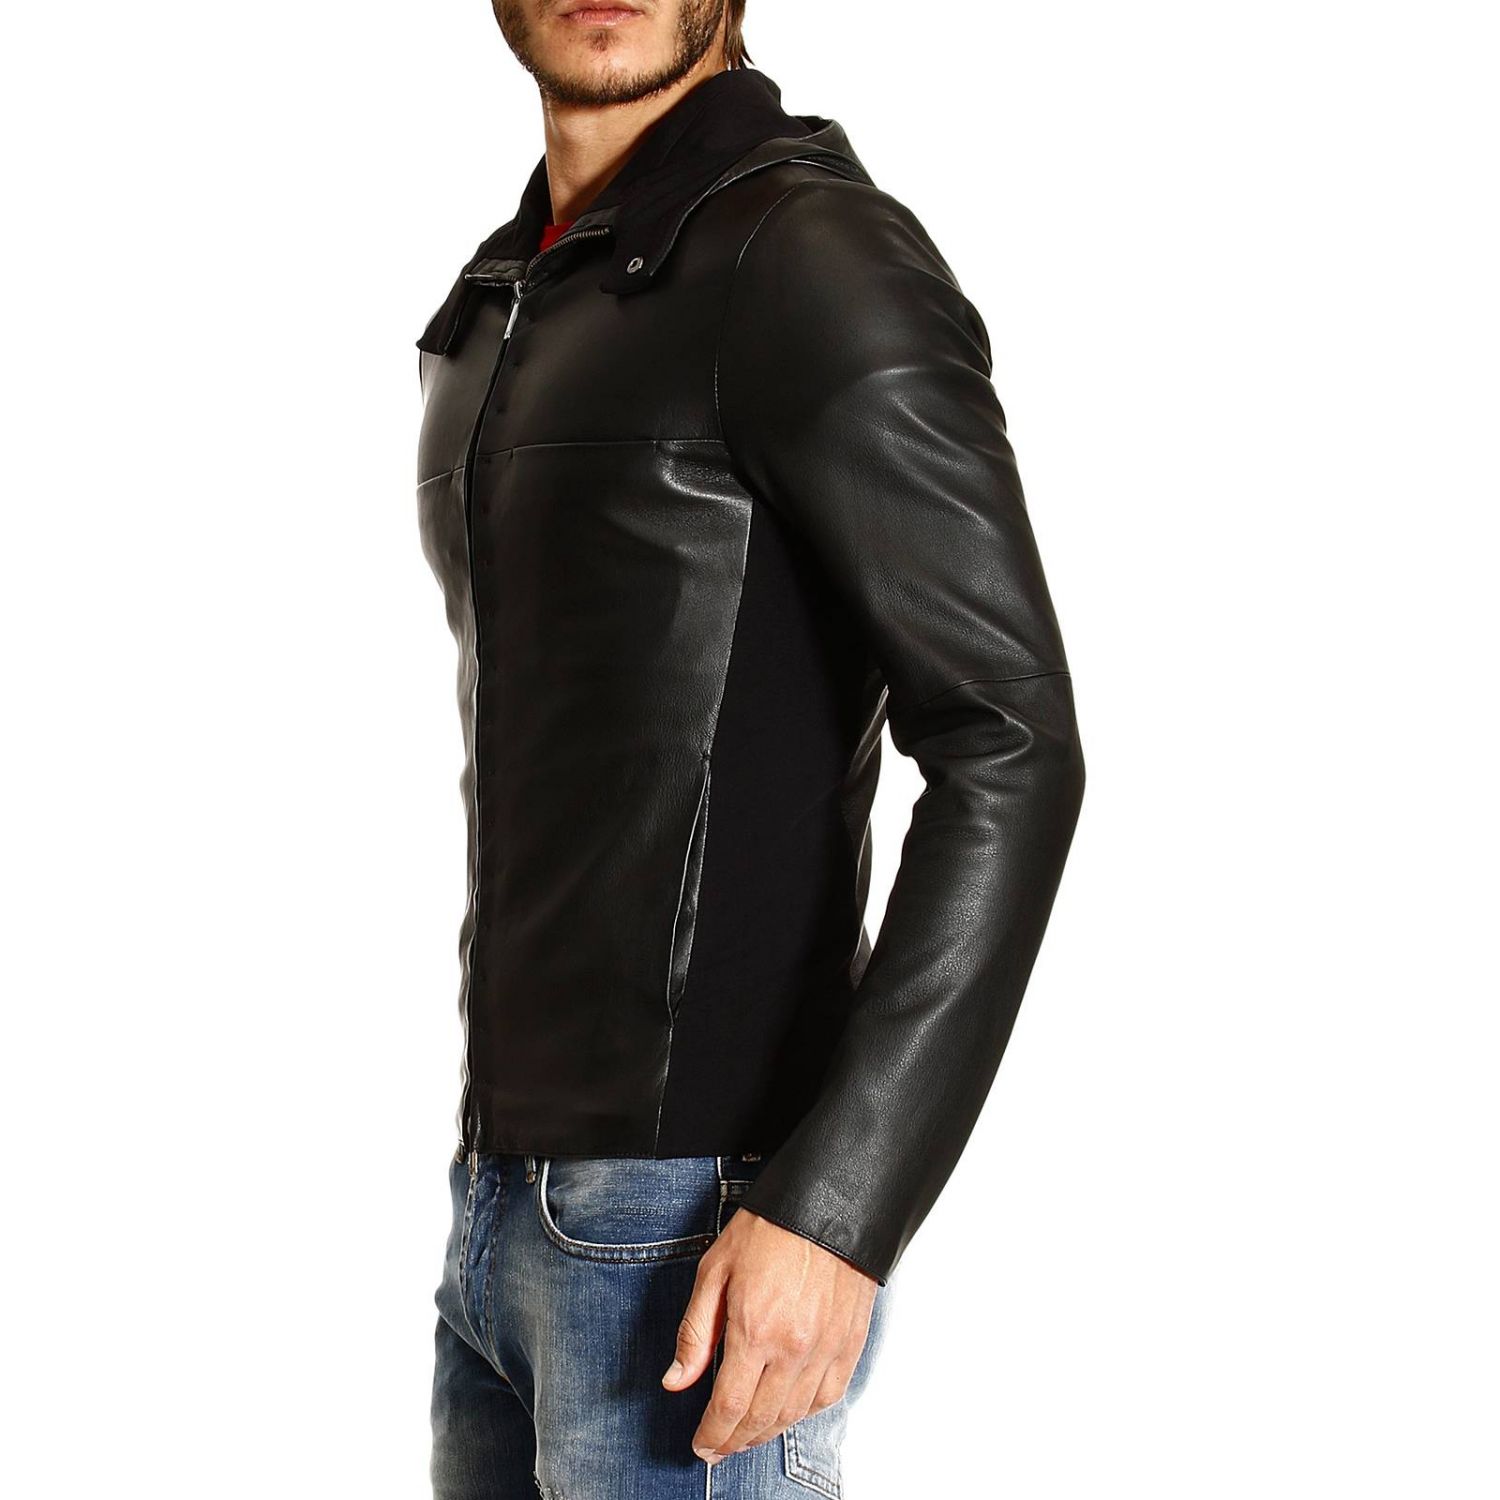 armani leather jackets mens